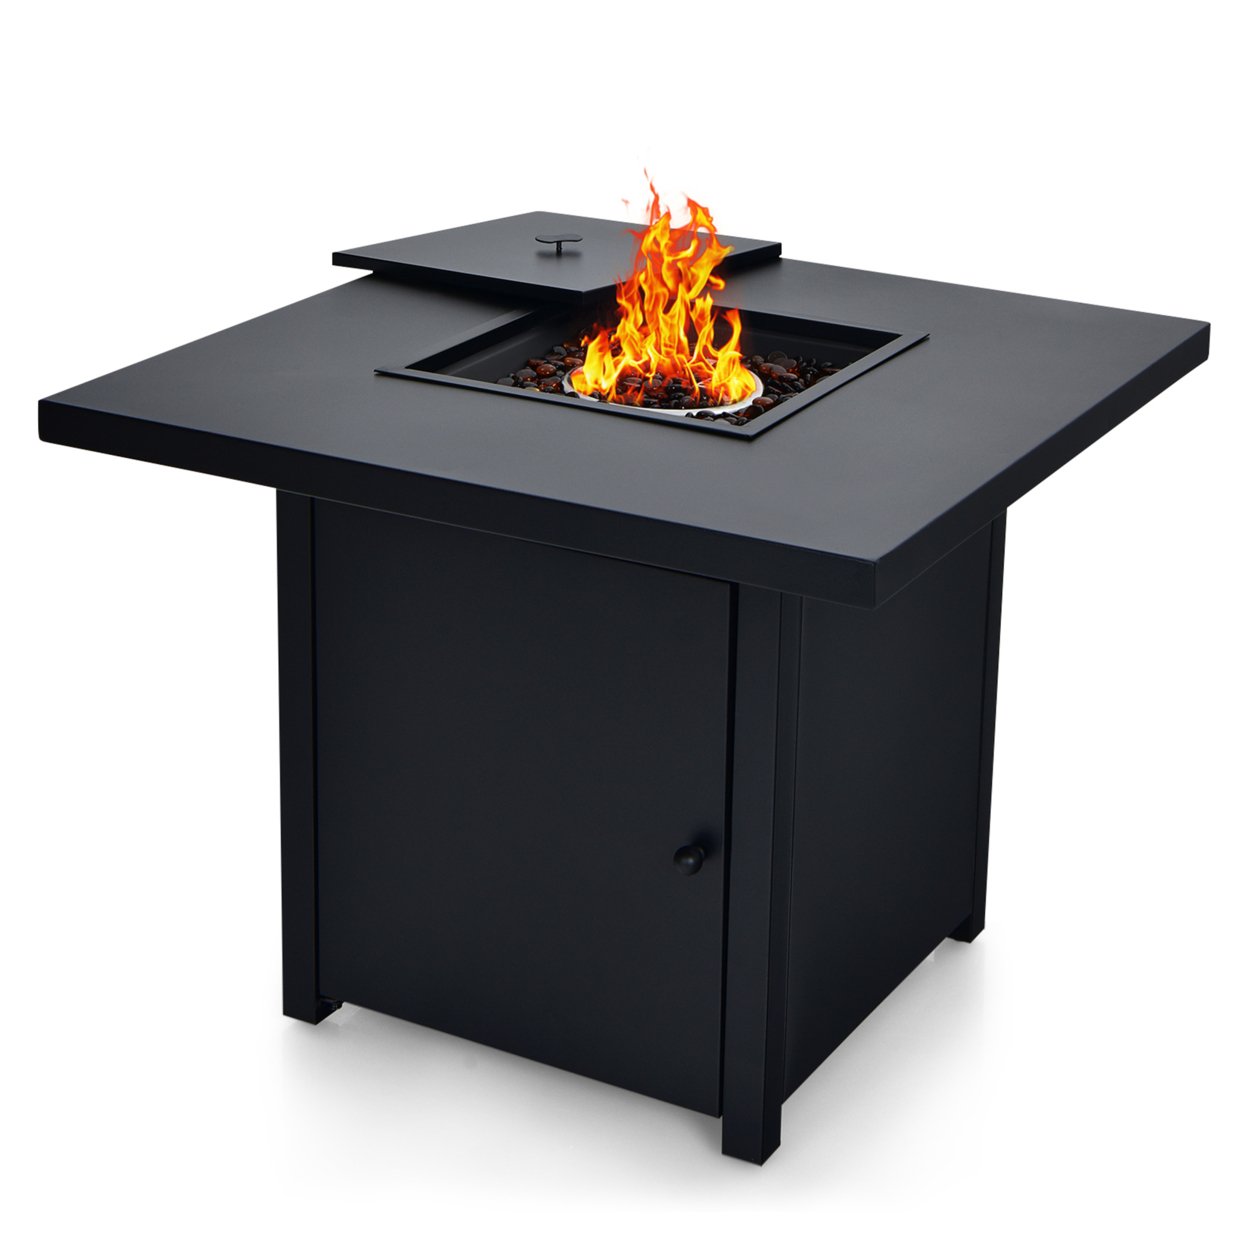 32'' Patio Fire Pit Table Propane Heater 40,000 BTU W/ CSA Certification